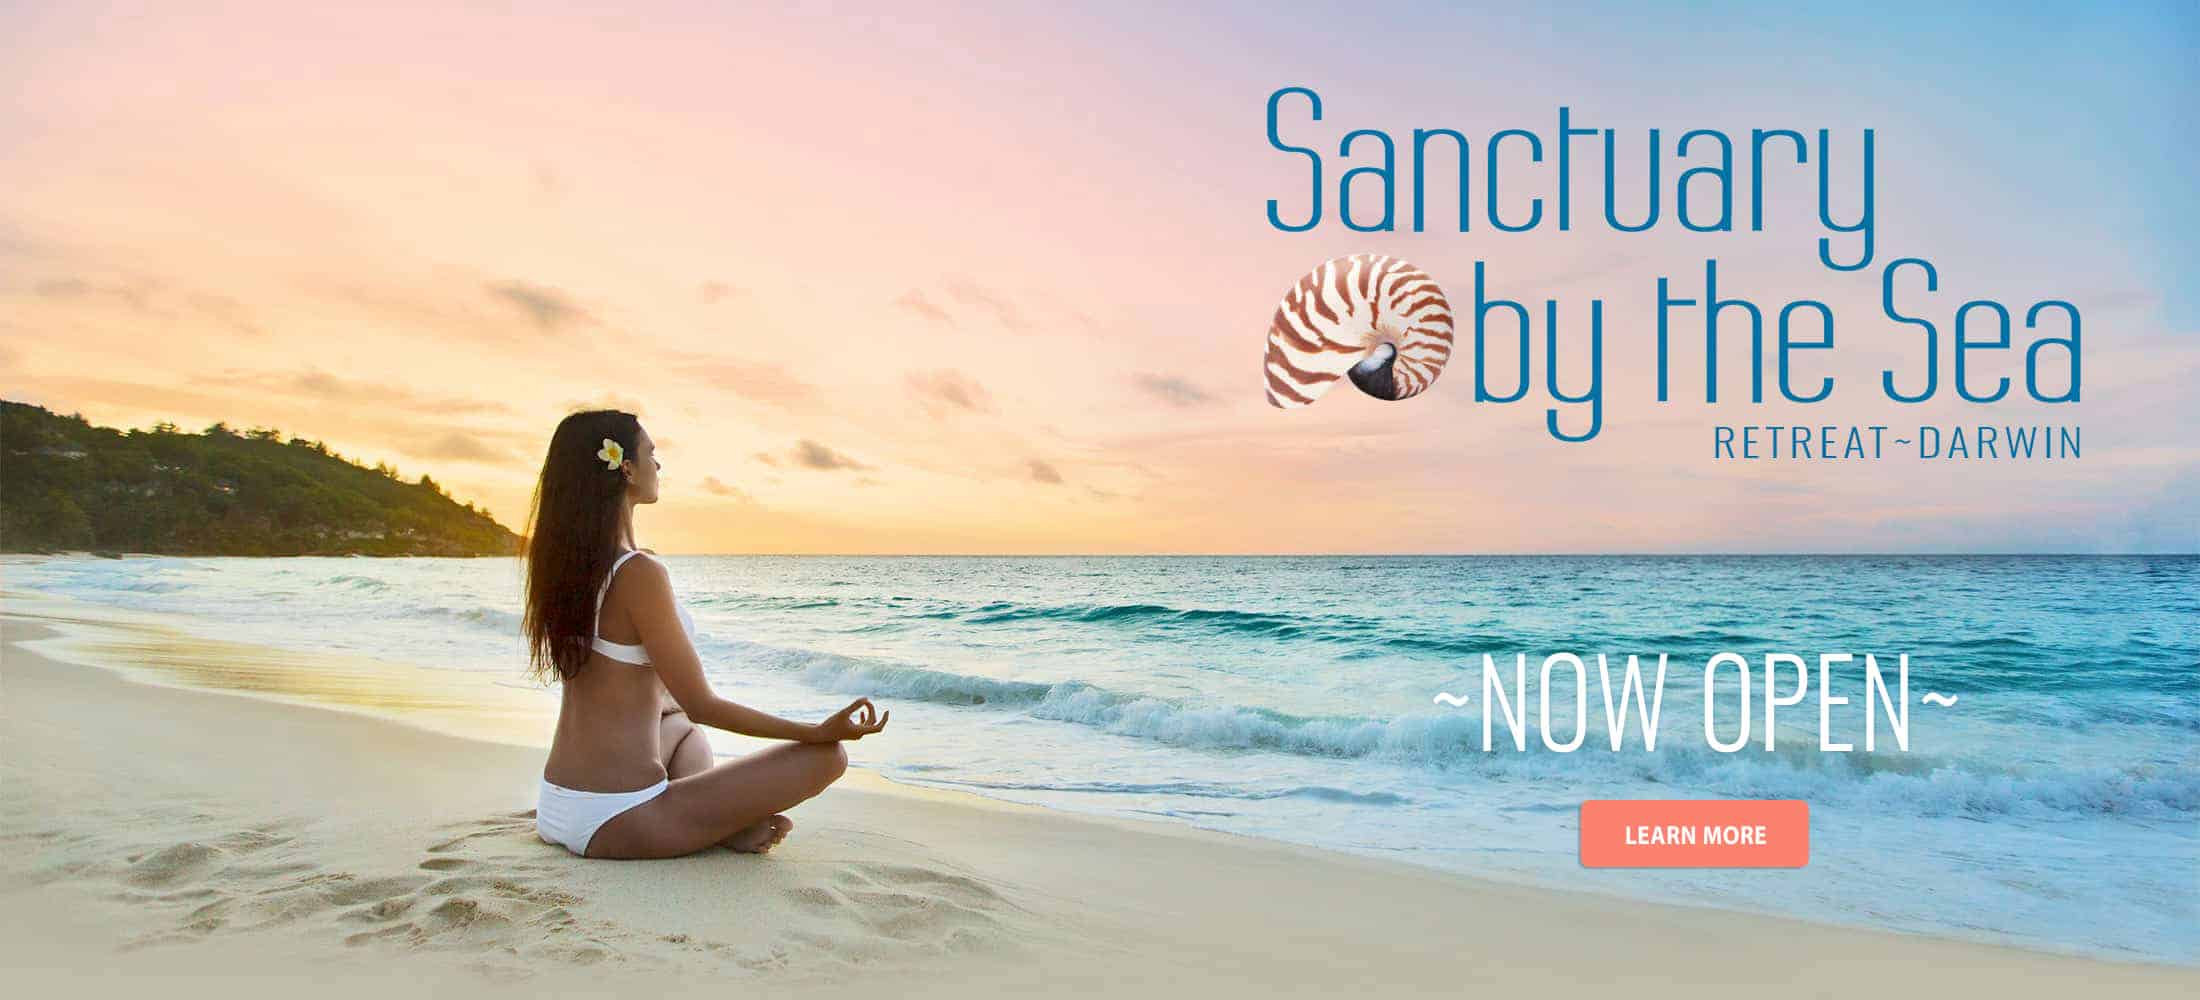 Sanctuary-by-sea-beach-header-now-open-2200